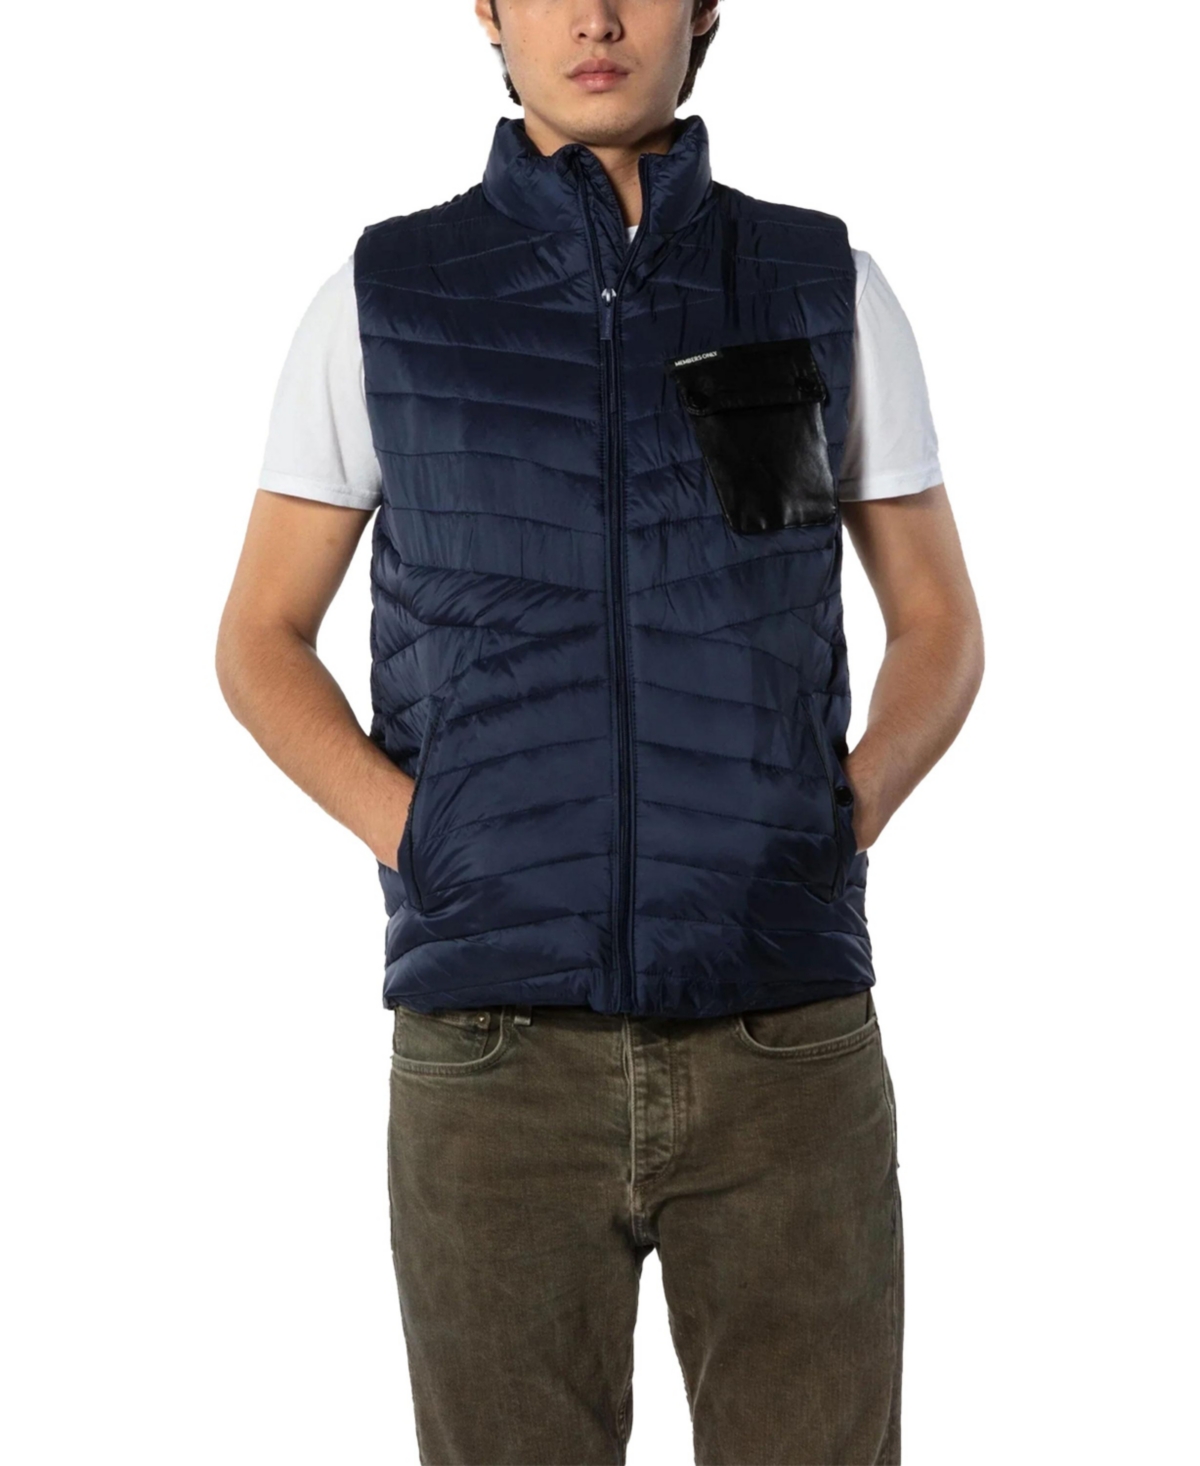 Men's Puffer Vest Jacket - Charcoal